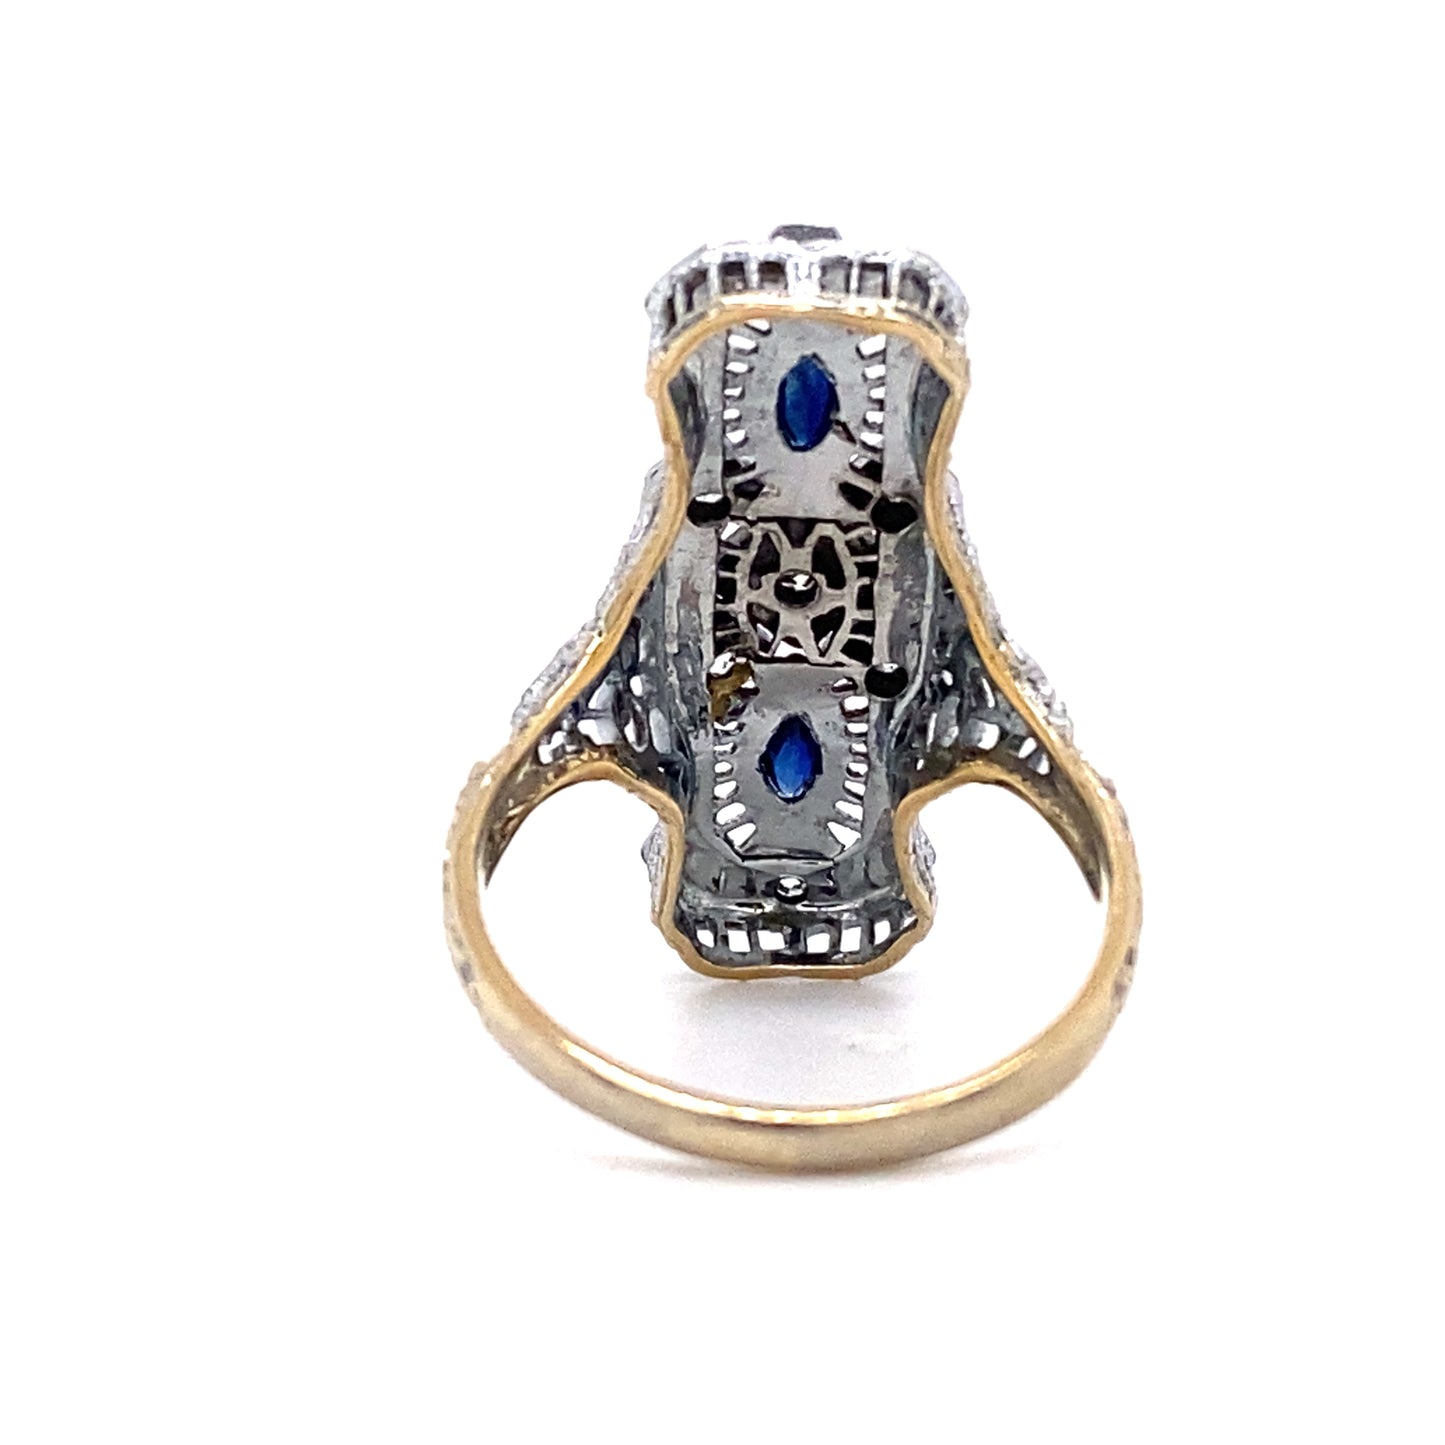 Circa 1920s Art Deco Elongated Filigree Sapphire Ring in Platinum and 18K Gold